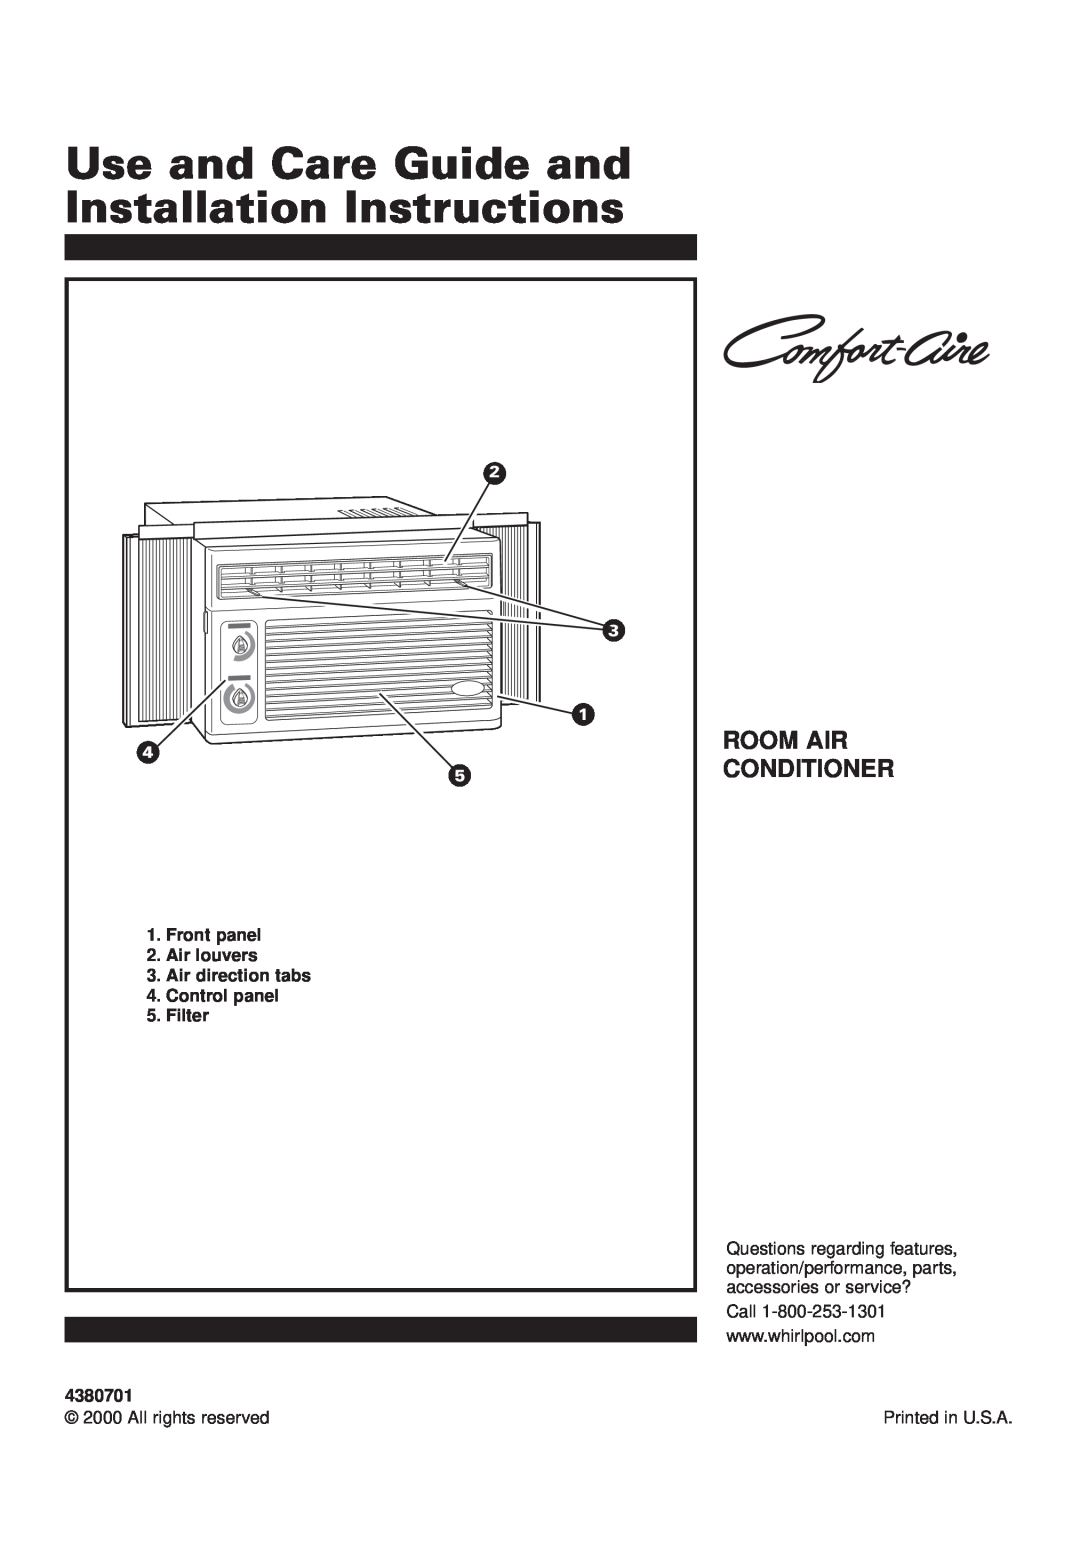 Whirlpool 4380701, RA51K0 installation instructions Use and Care Guide and Installation Instructions, Room Air Conditioner 